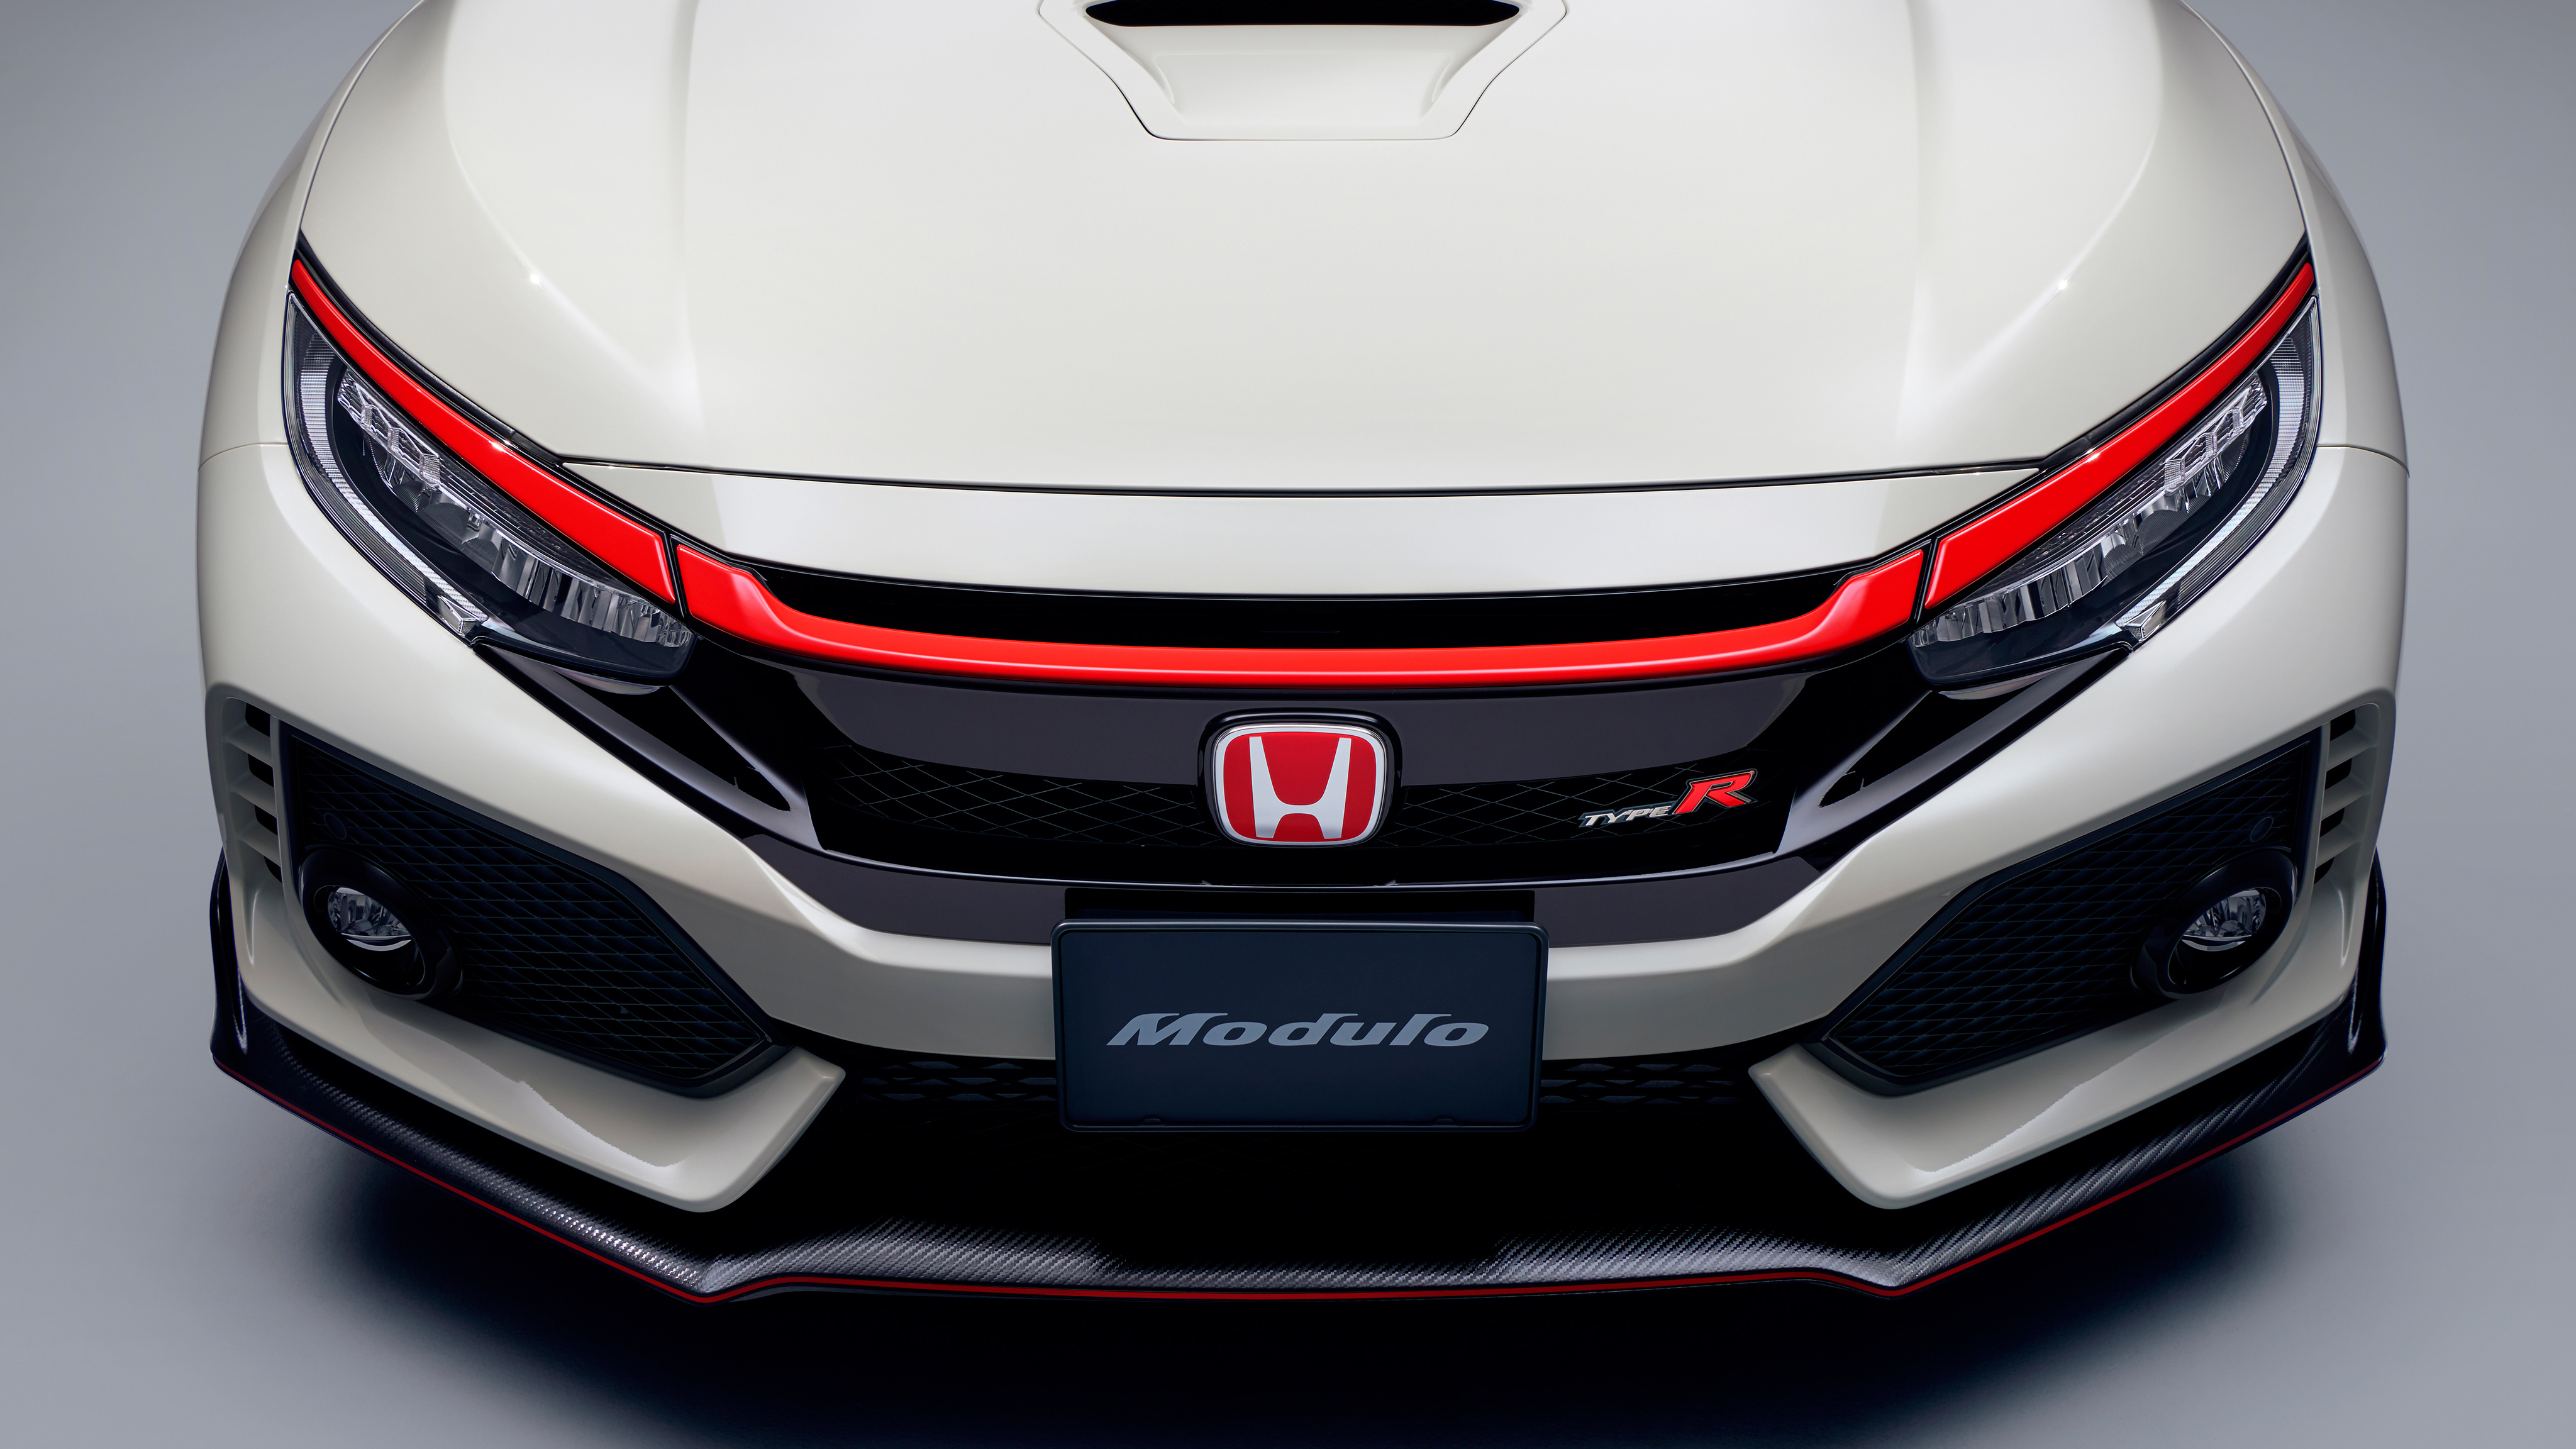 Honda Civic Type R 2017 Modulo - HD Wallpaper 